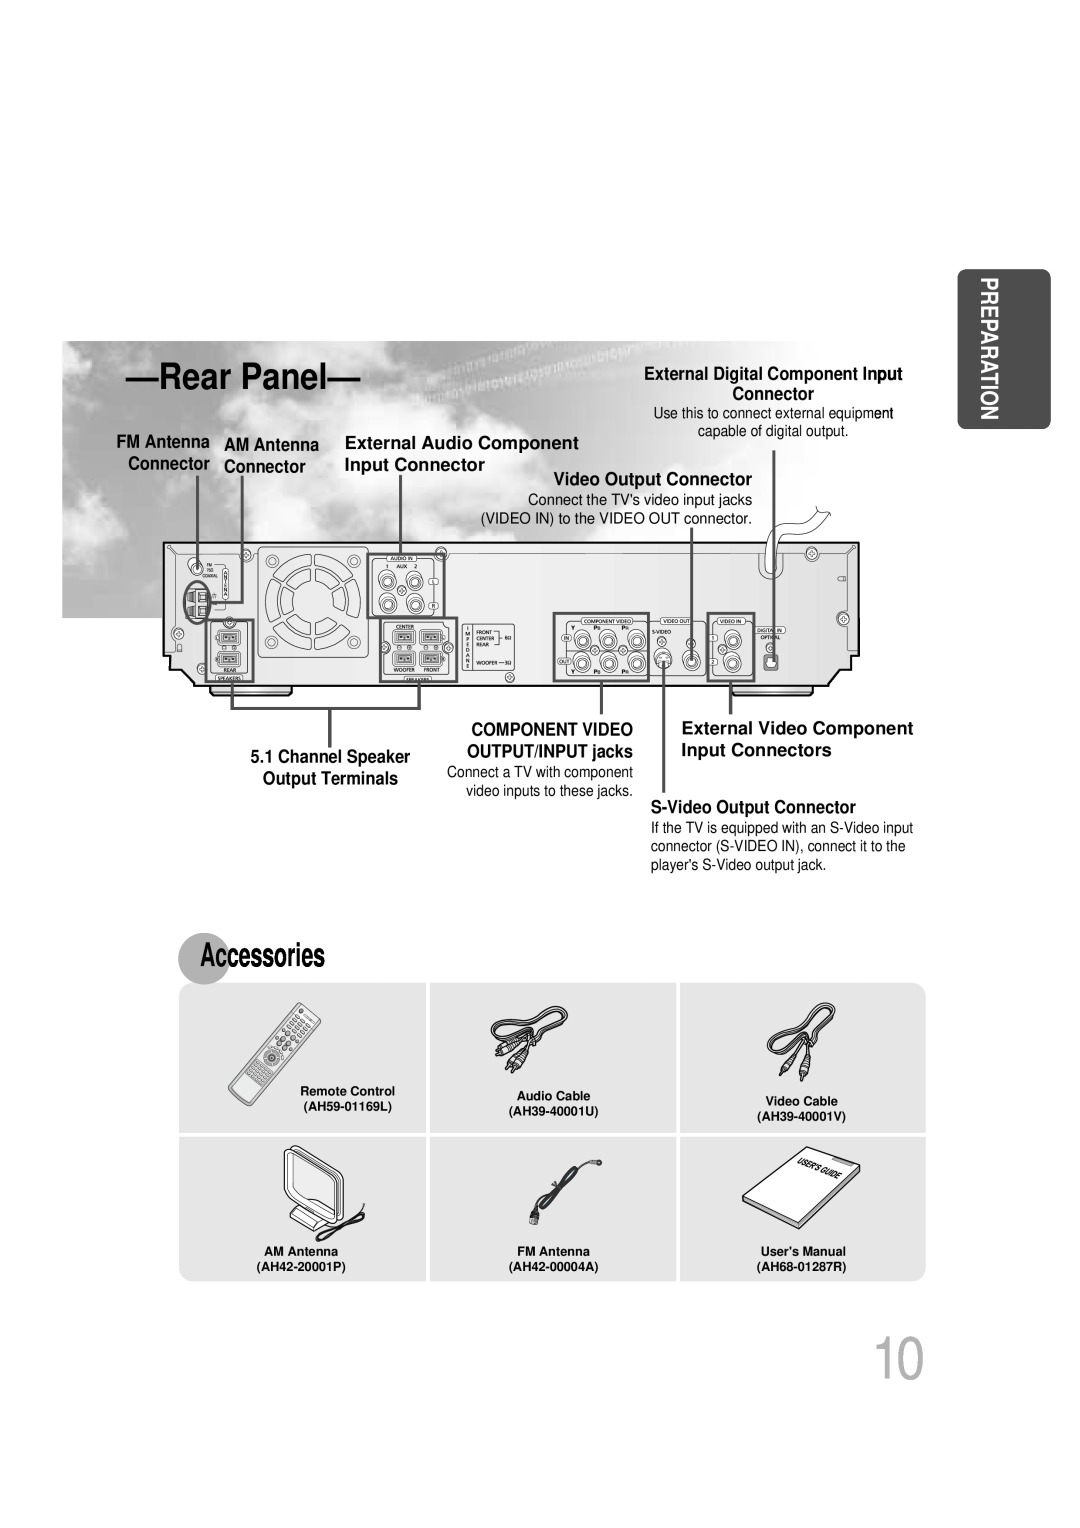 Samsung HT-DB600 Rear Panel, Accessories, Preparation, External Digital Component Input, Connector, FM Antenna 